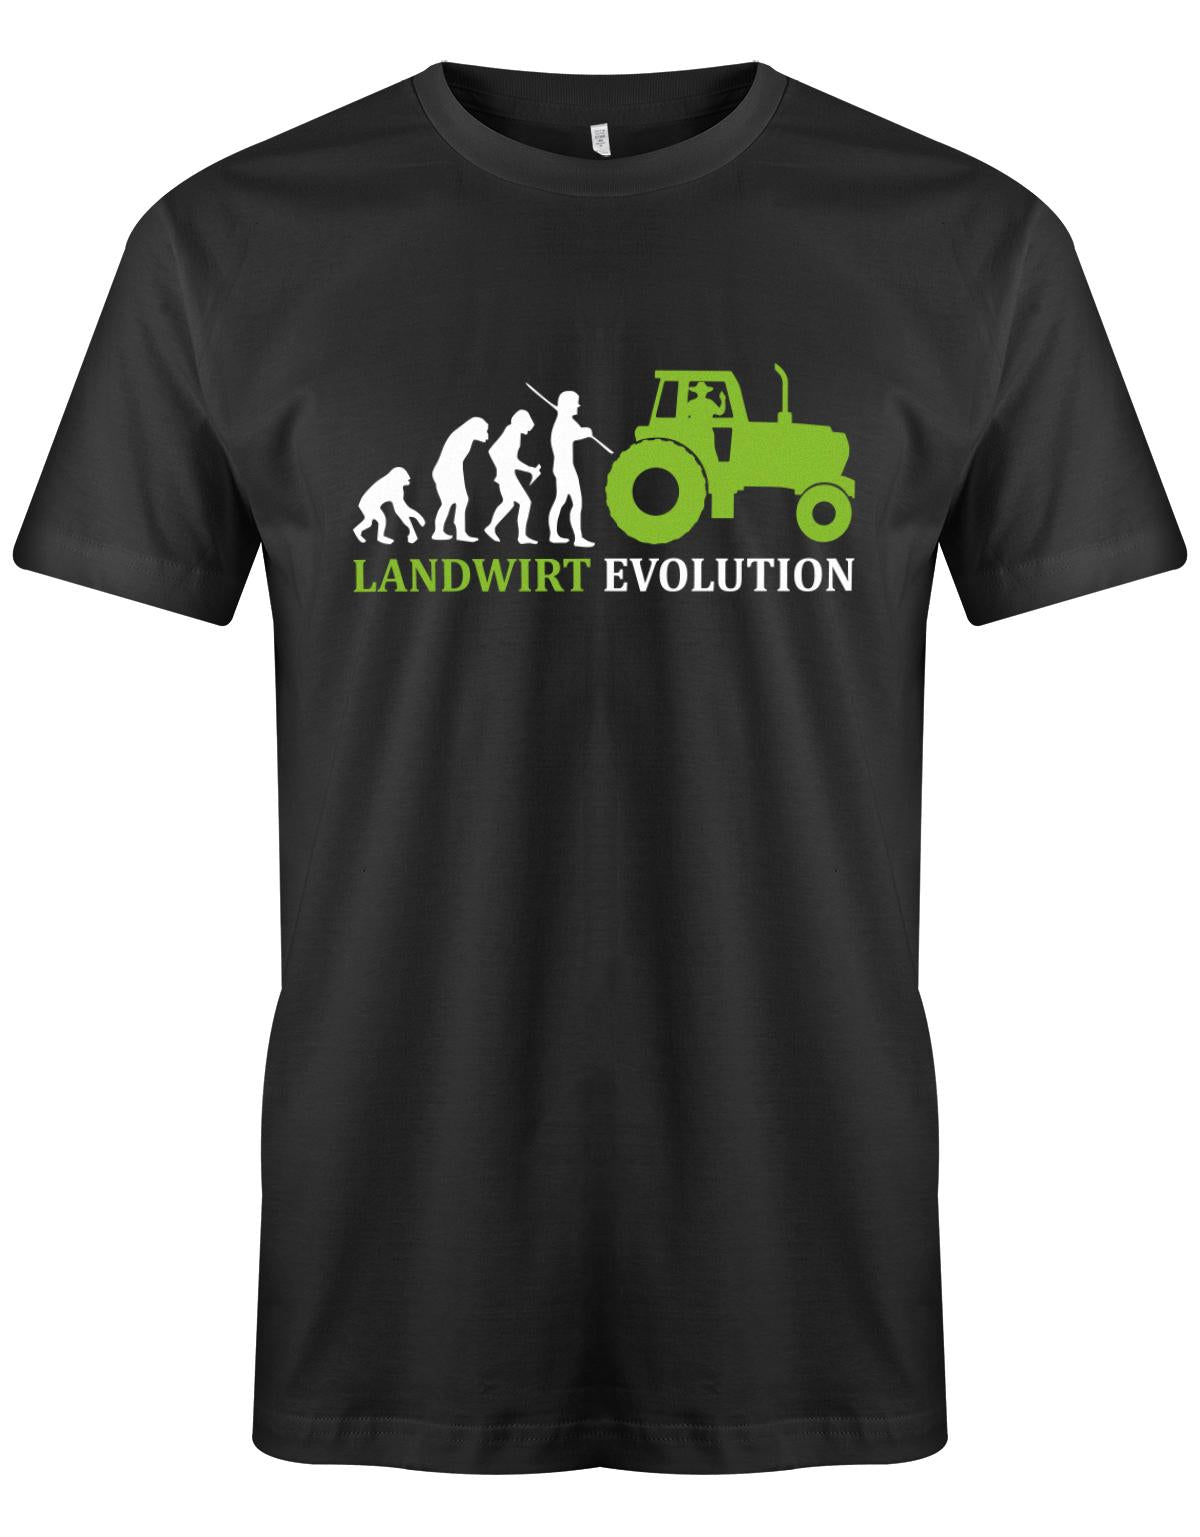 Landwirtschaft Shirt Männer - Landwirt Evolution Schwarz